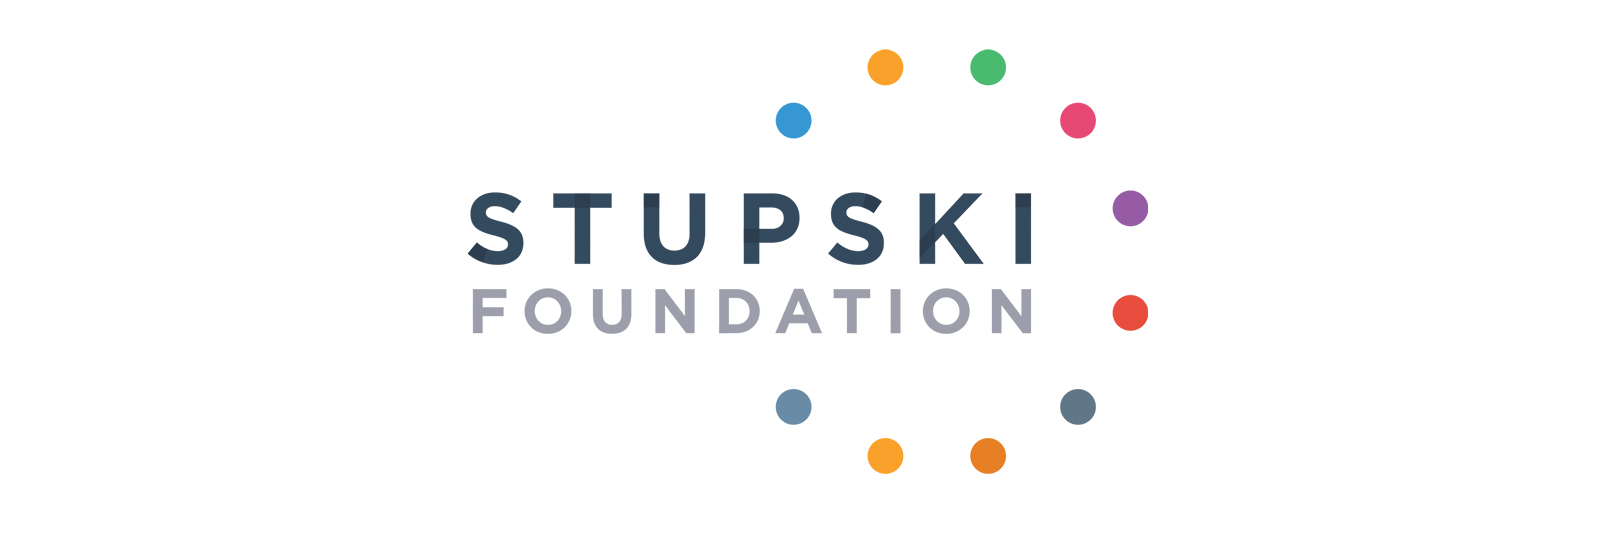 Stupski Foundation Awards Palliative Care Grant to Chinese Hospital